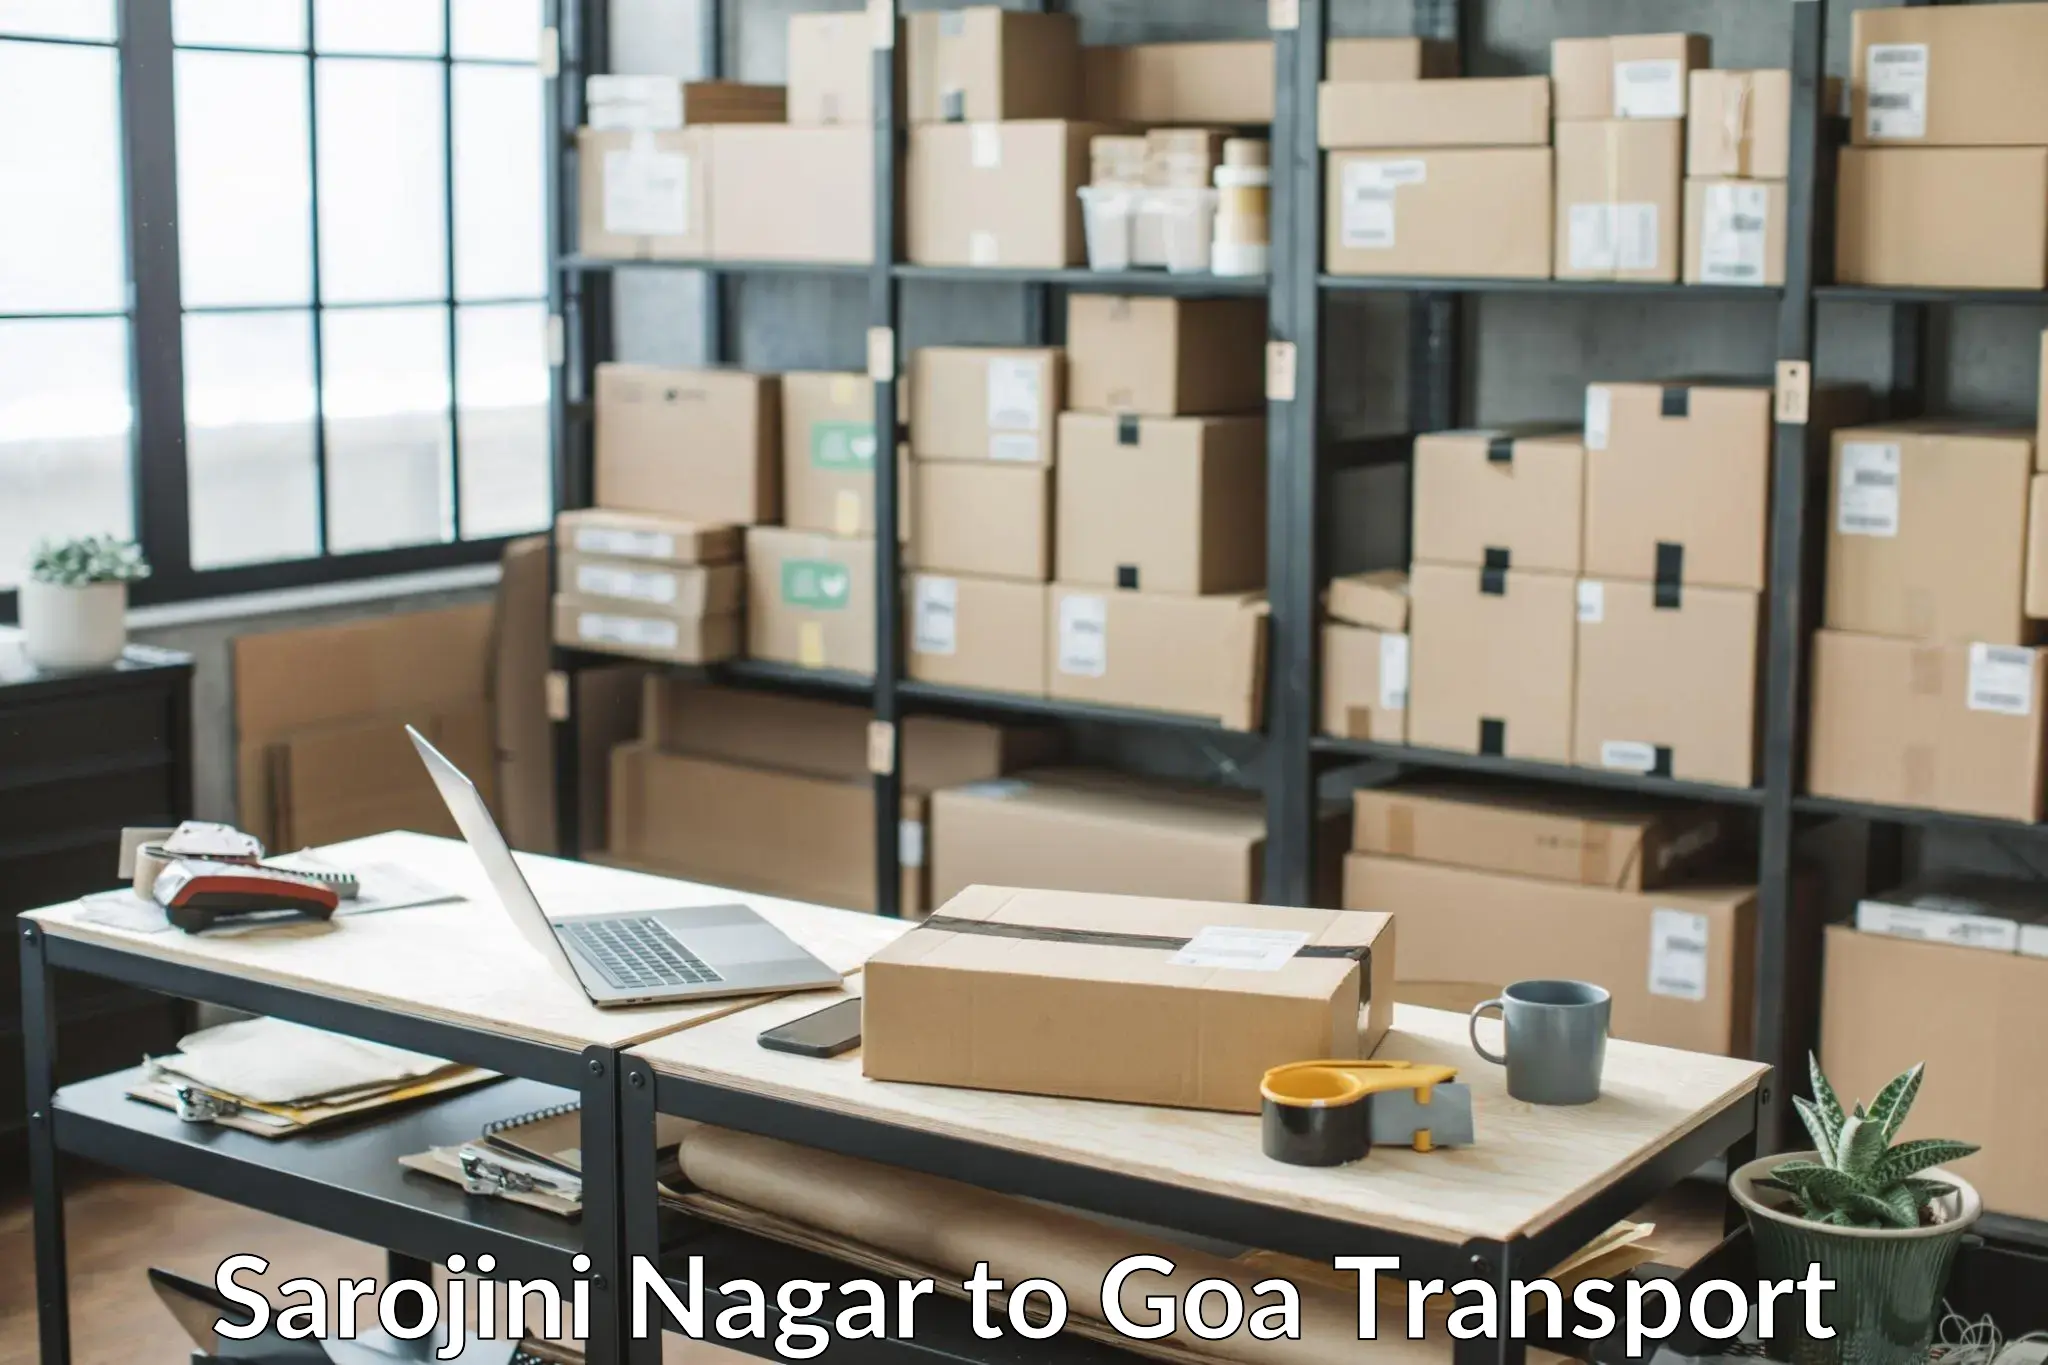 Bike transport service Sarojini Nagar to IIT Goa